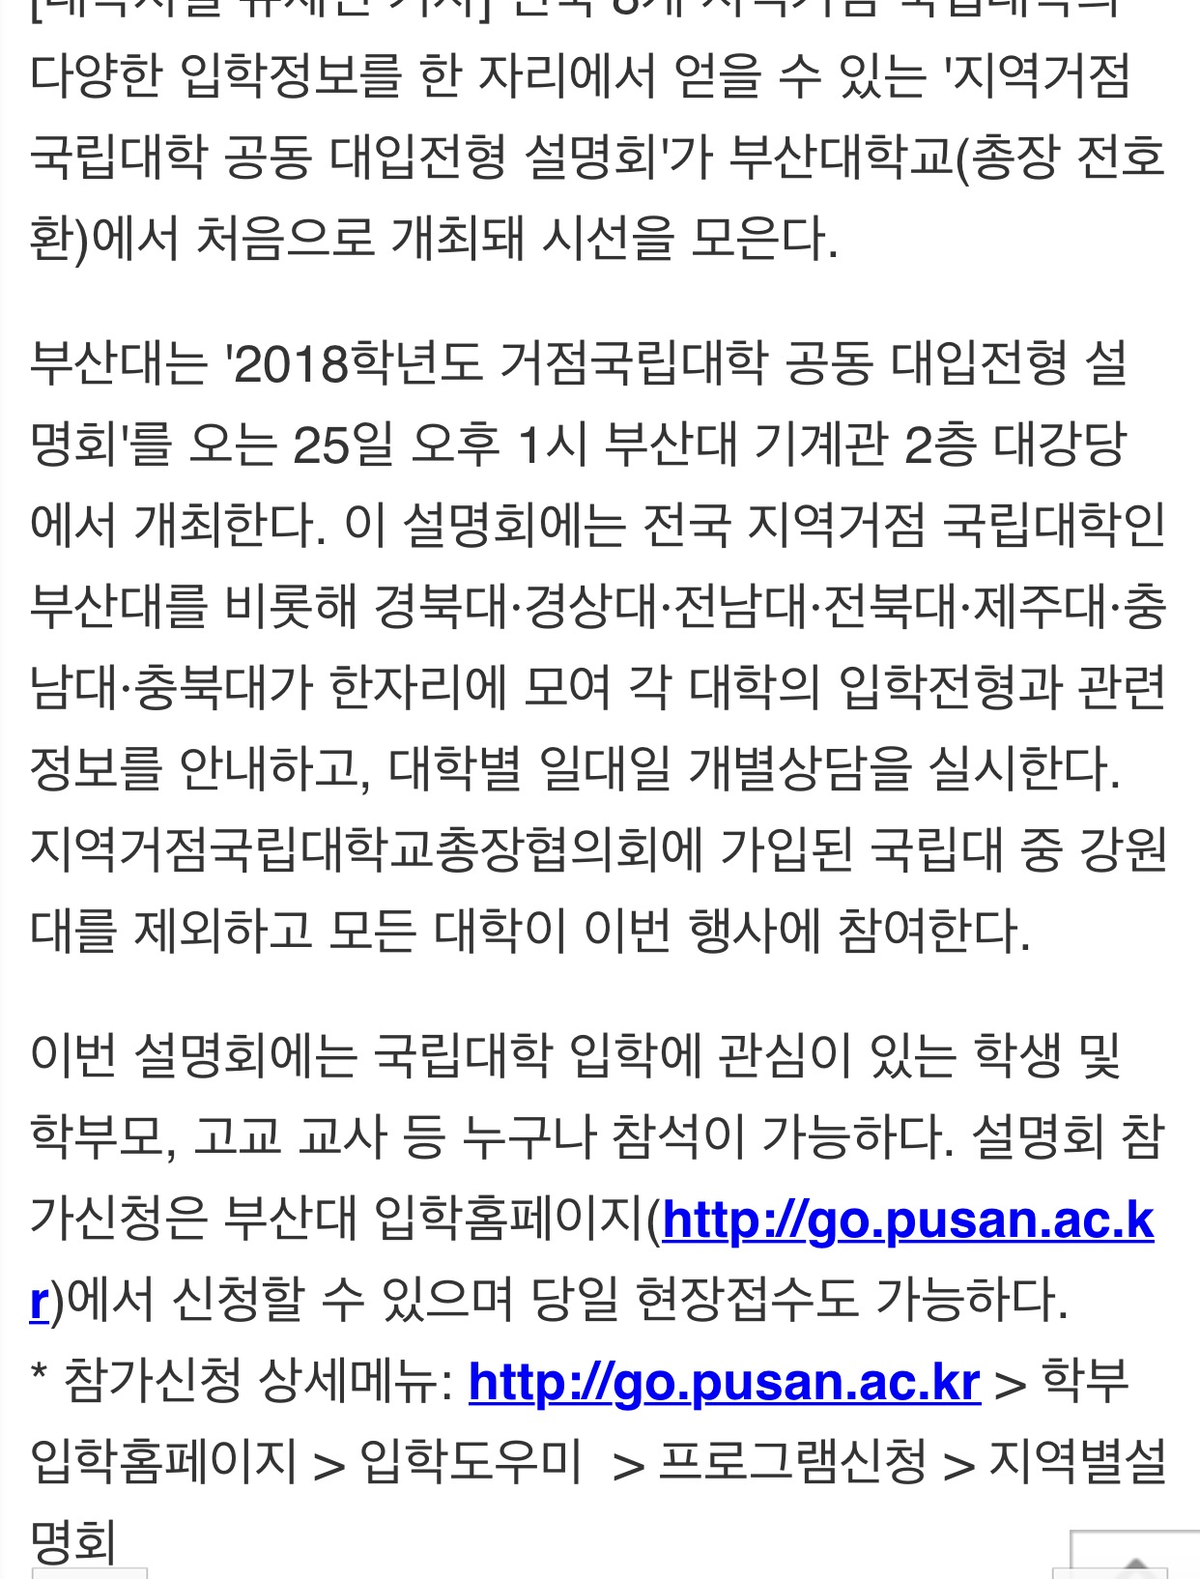 IMG_0663.PNG : 부산대 '지역거점 국립대학 공동 대입전형 설명회' 개최